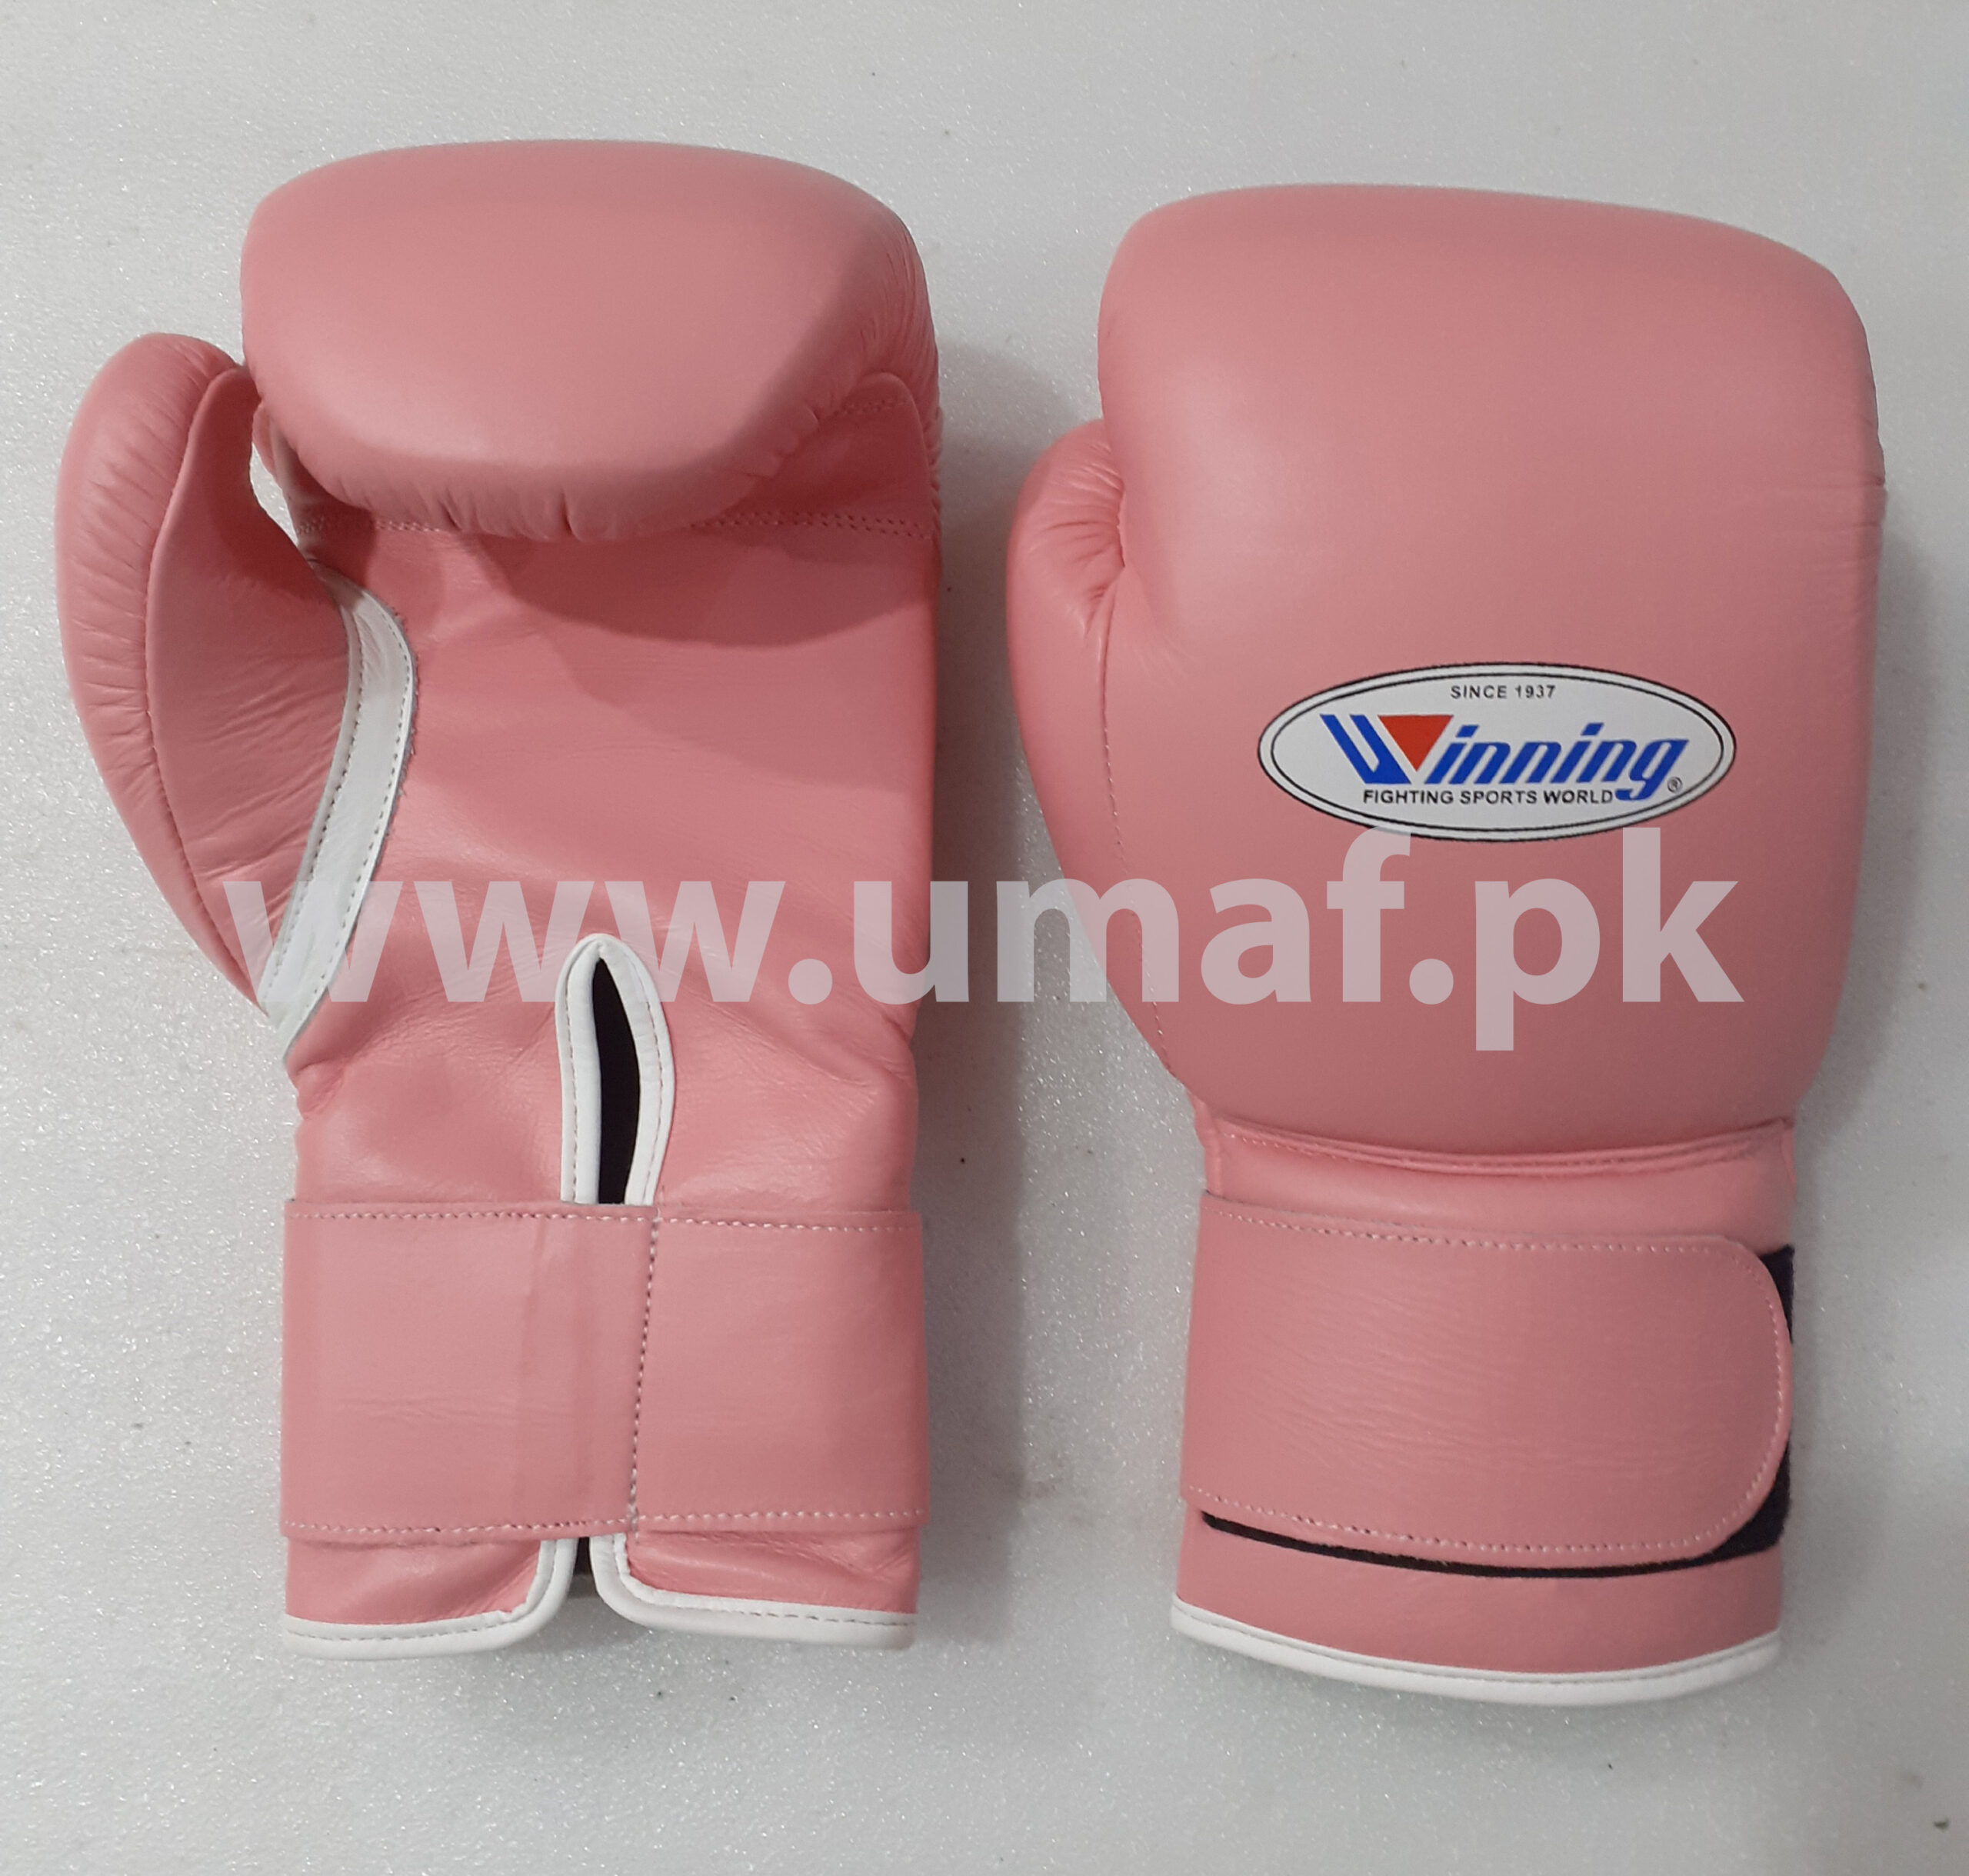 Winning Boxing Gloves Pink, Velcro | Umaf